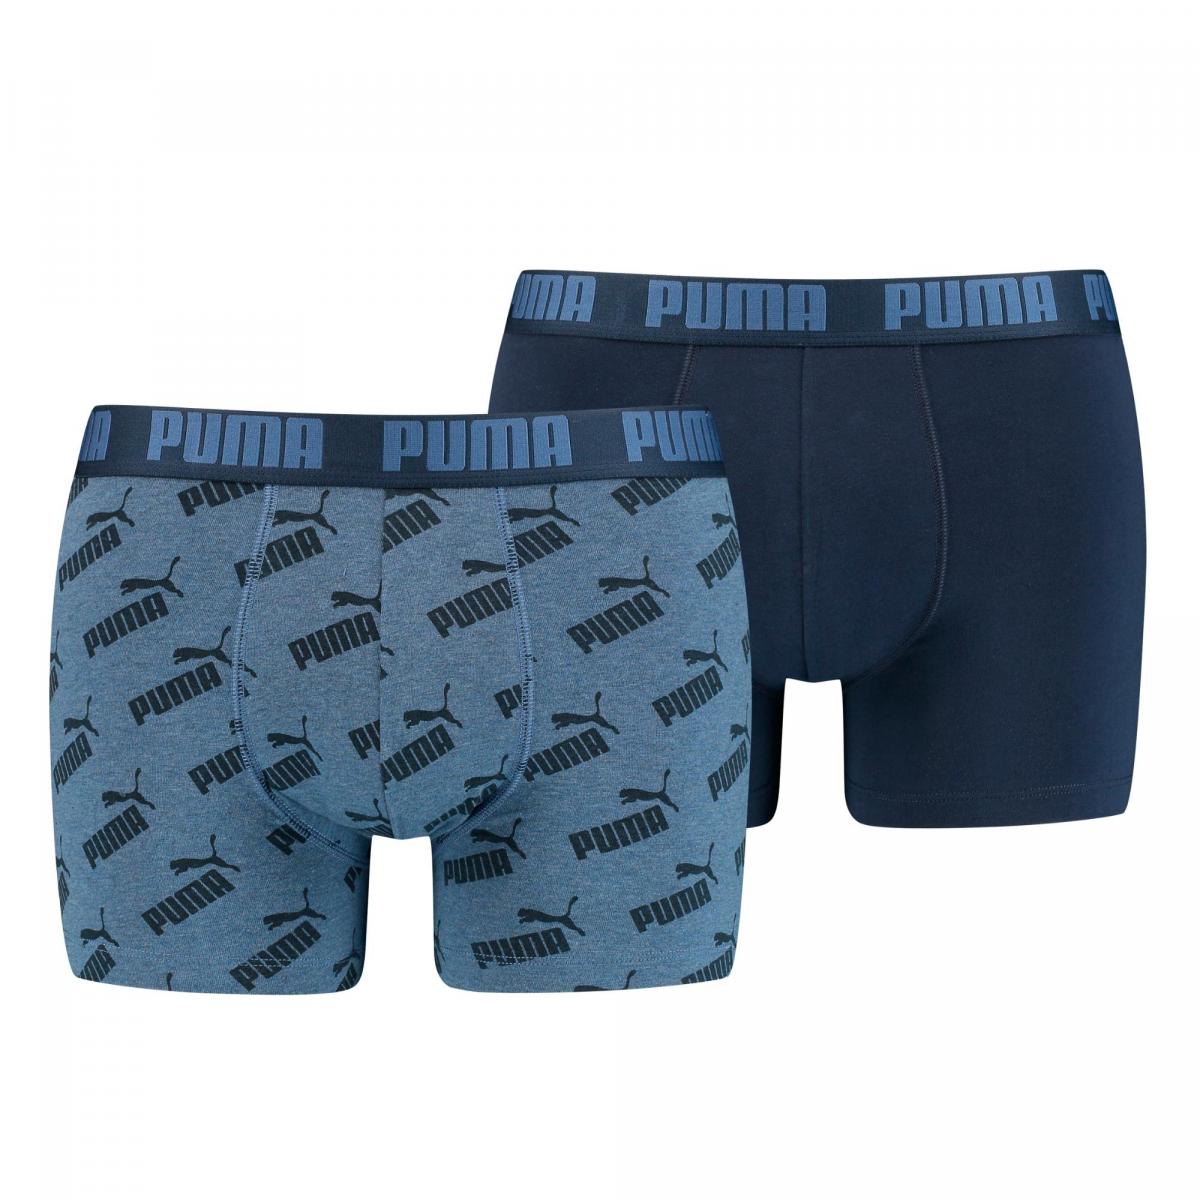 Puma Boxershorts 2er-Pack - Herren - blau